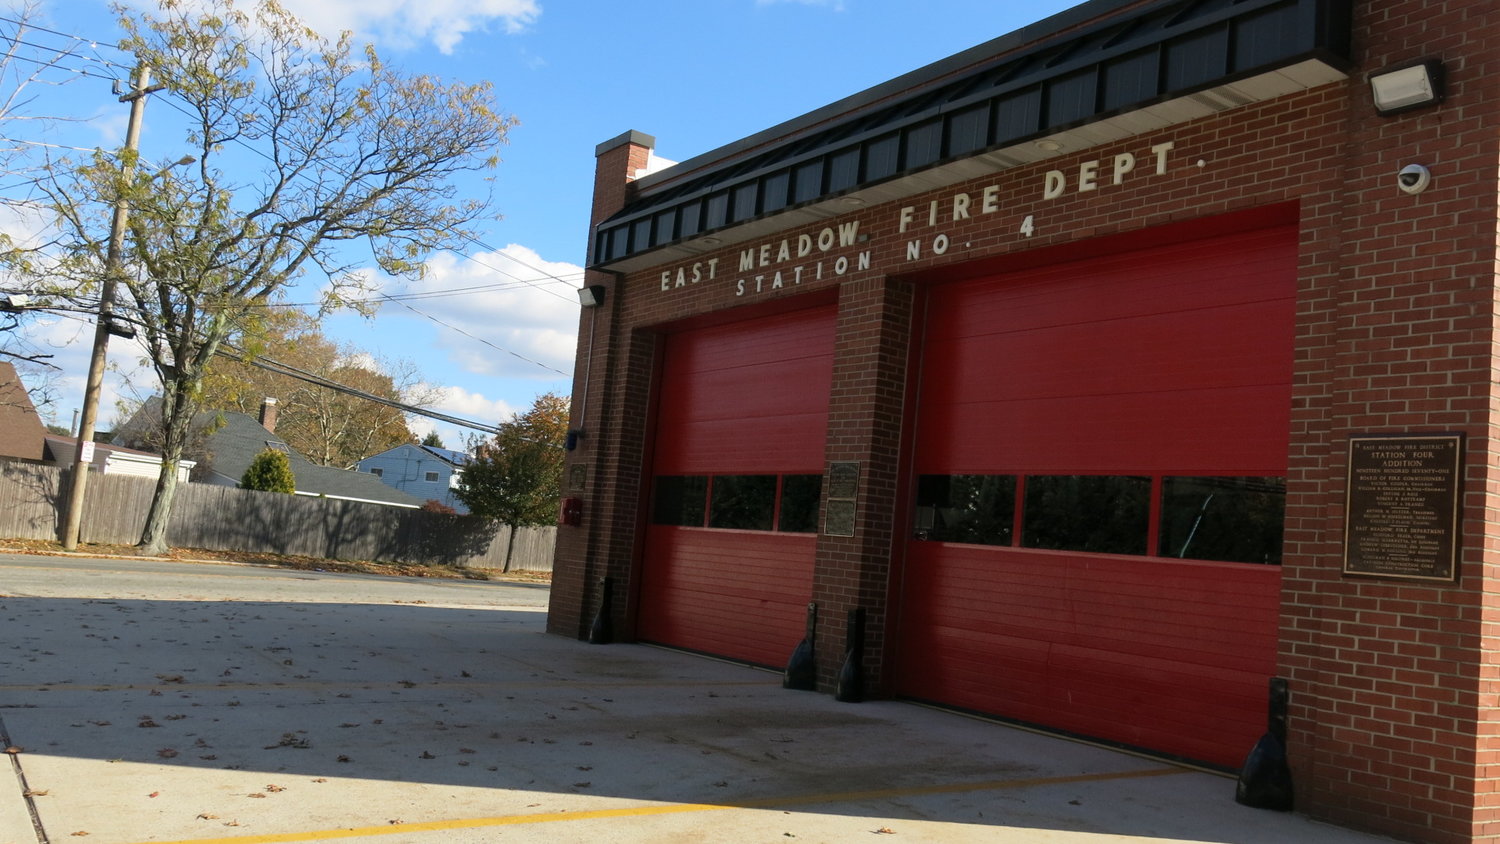 The East Meadow Fire Department Station No. 4, which is in Salisbury on Carman Avenue is seeking new members.